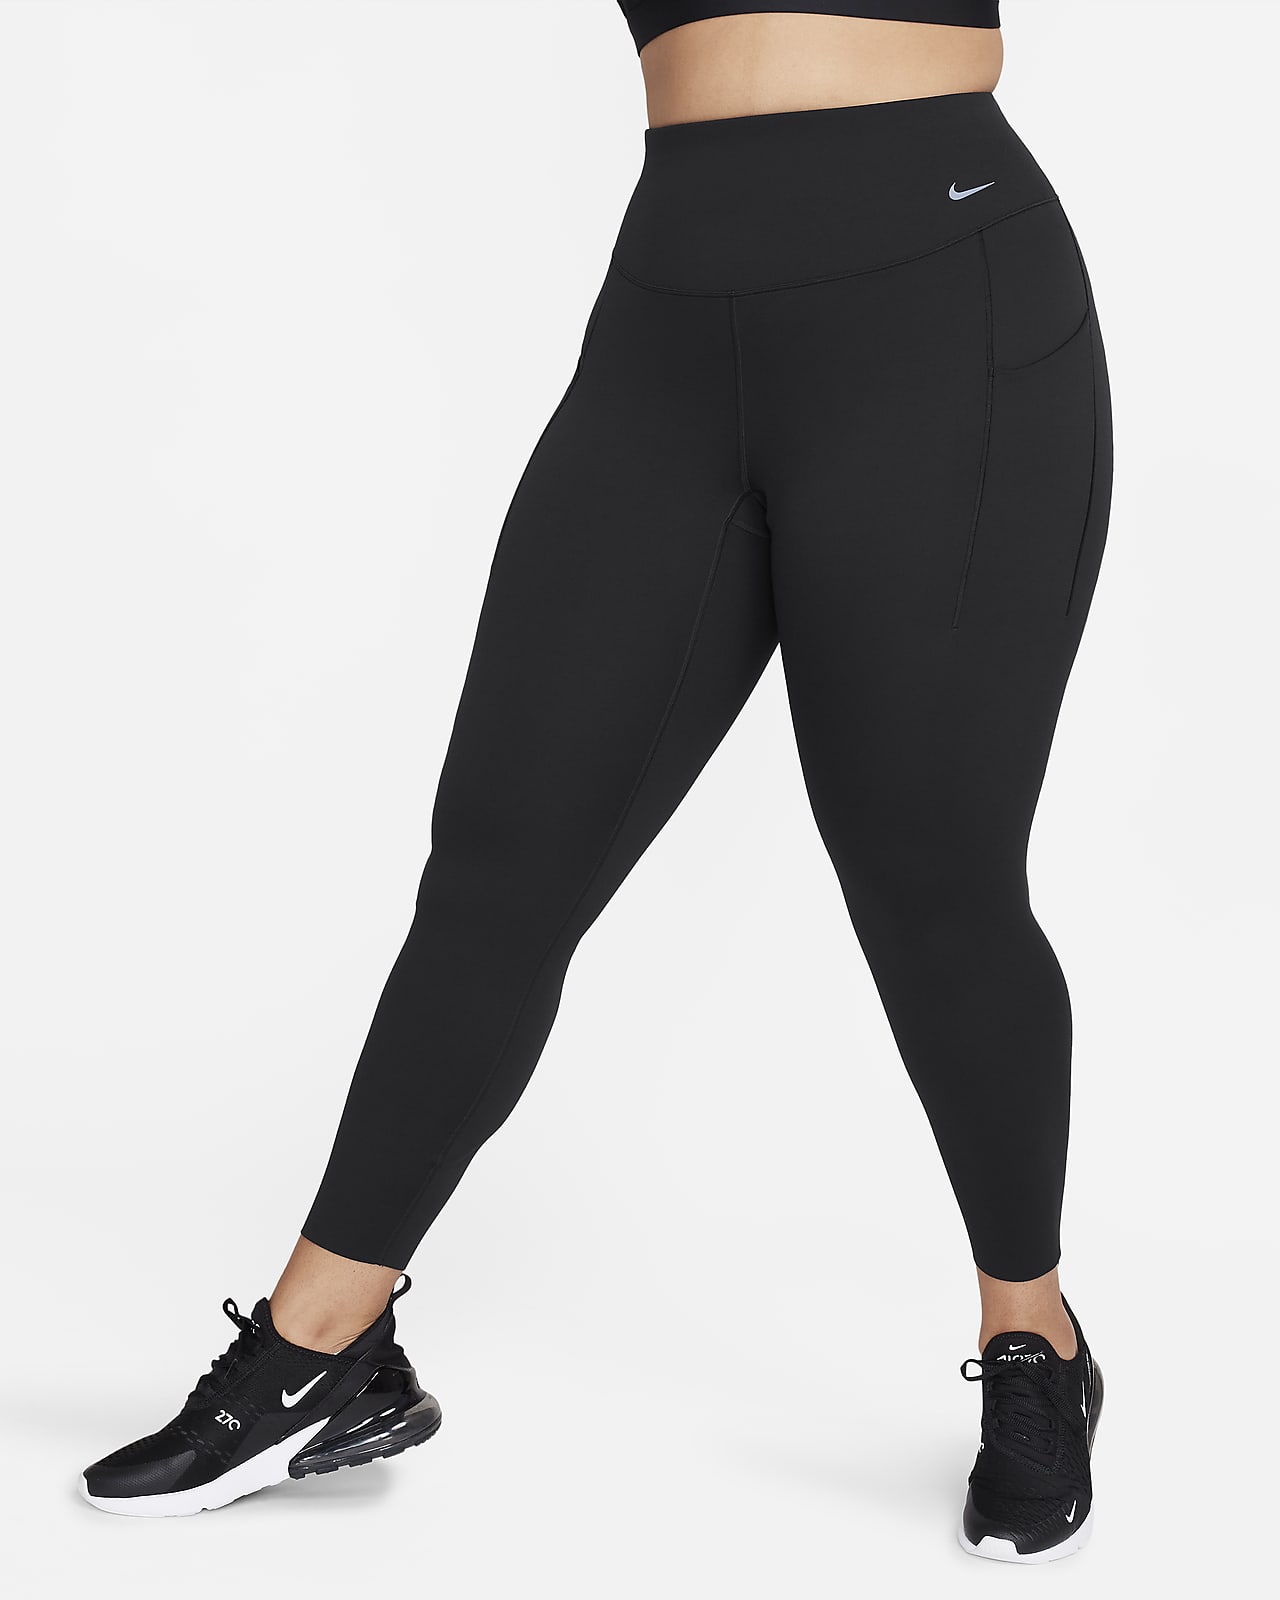 Nike Women's Dri-Fit Universa High Rise Full Length Legging from